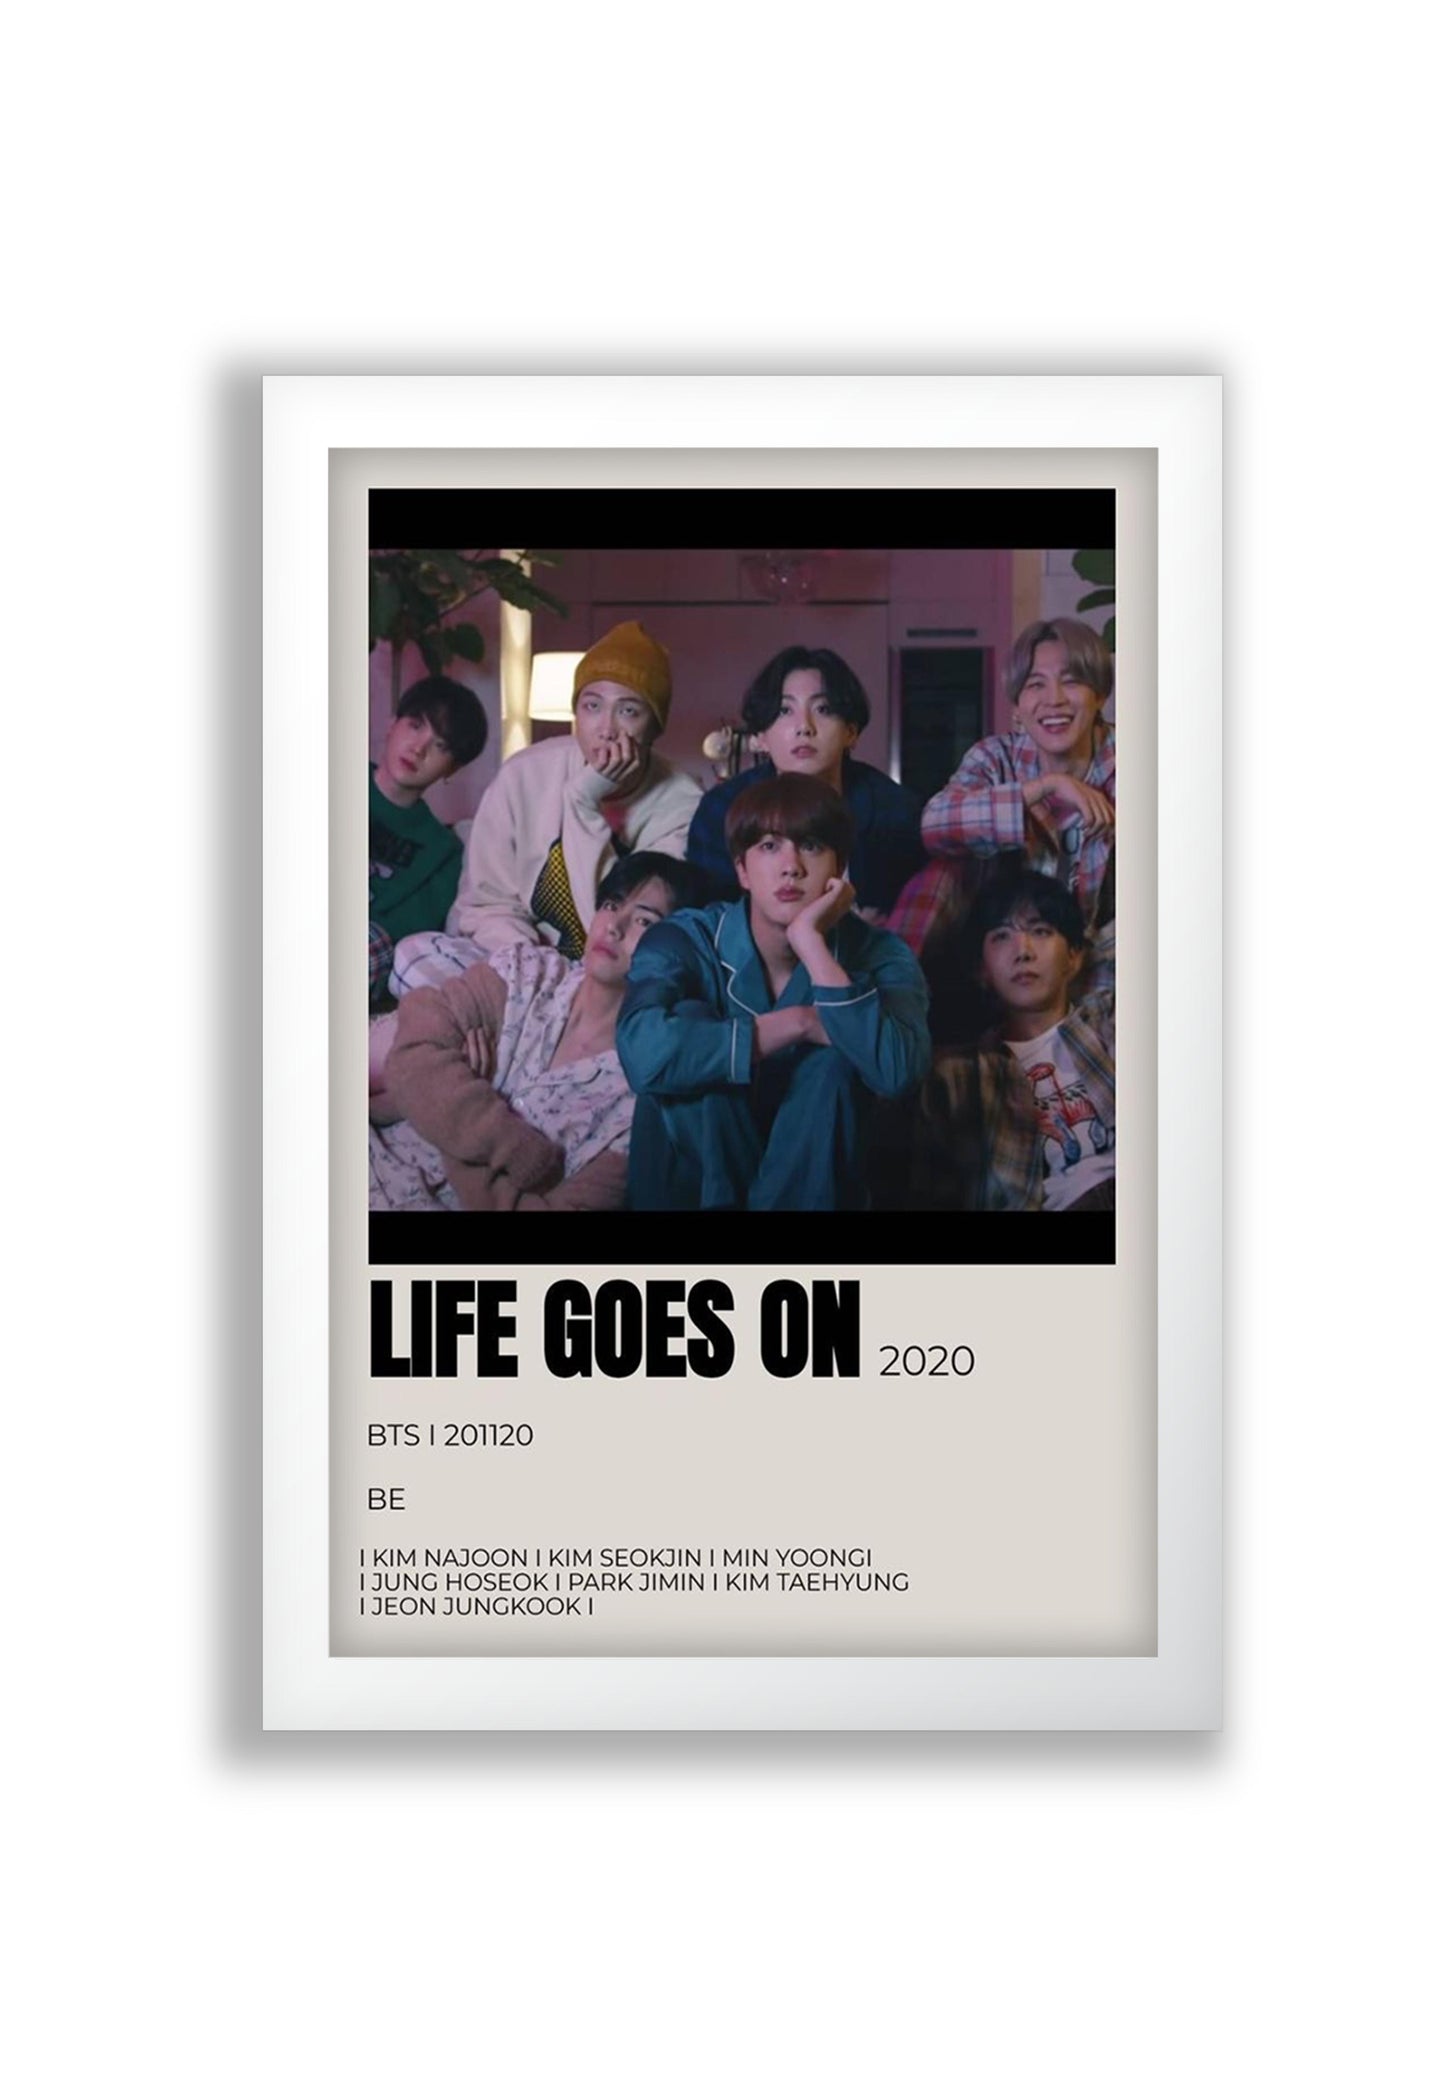 LifeGoesOn - BTS